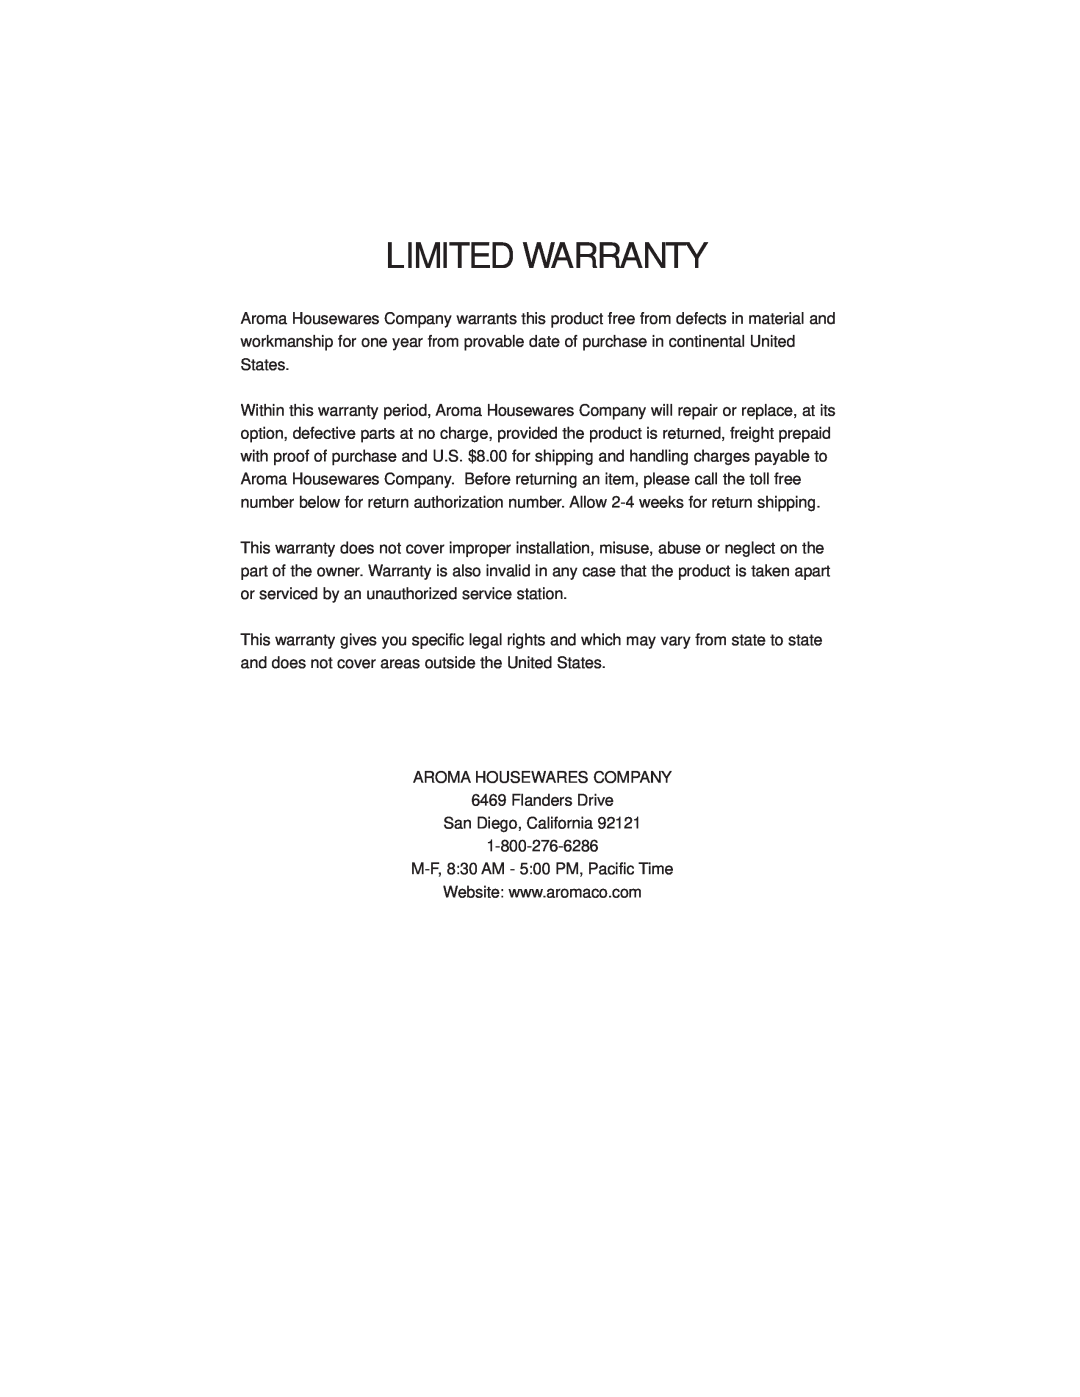 Aroma ARC3946 instruction manual Limited Warranty, AROMA HOUSEWARES COMPANY 6469 Flanders Drive San Diego, California 